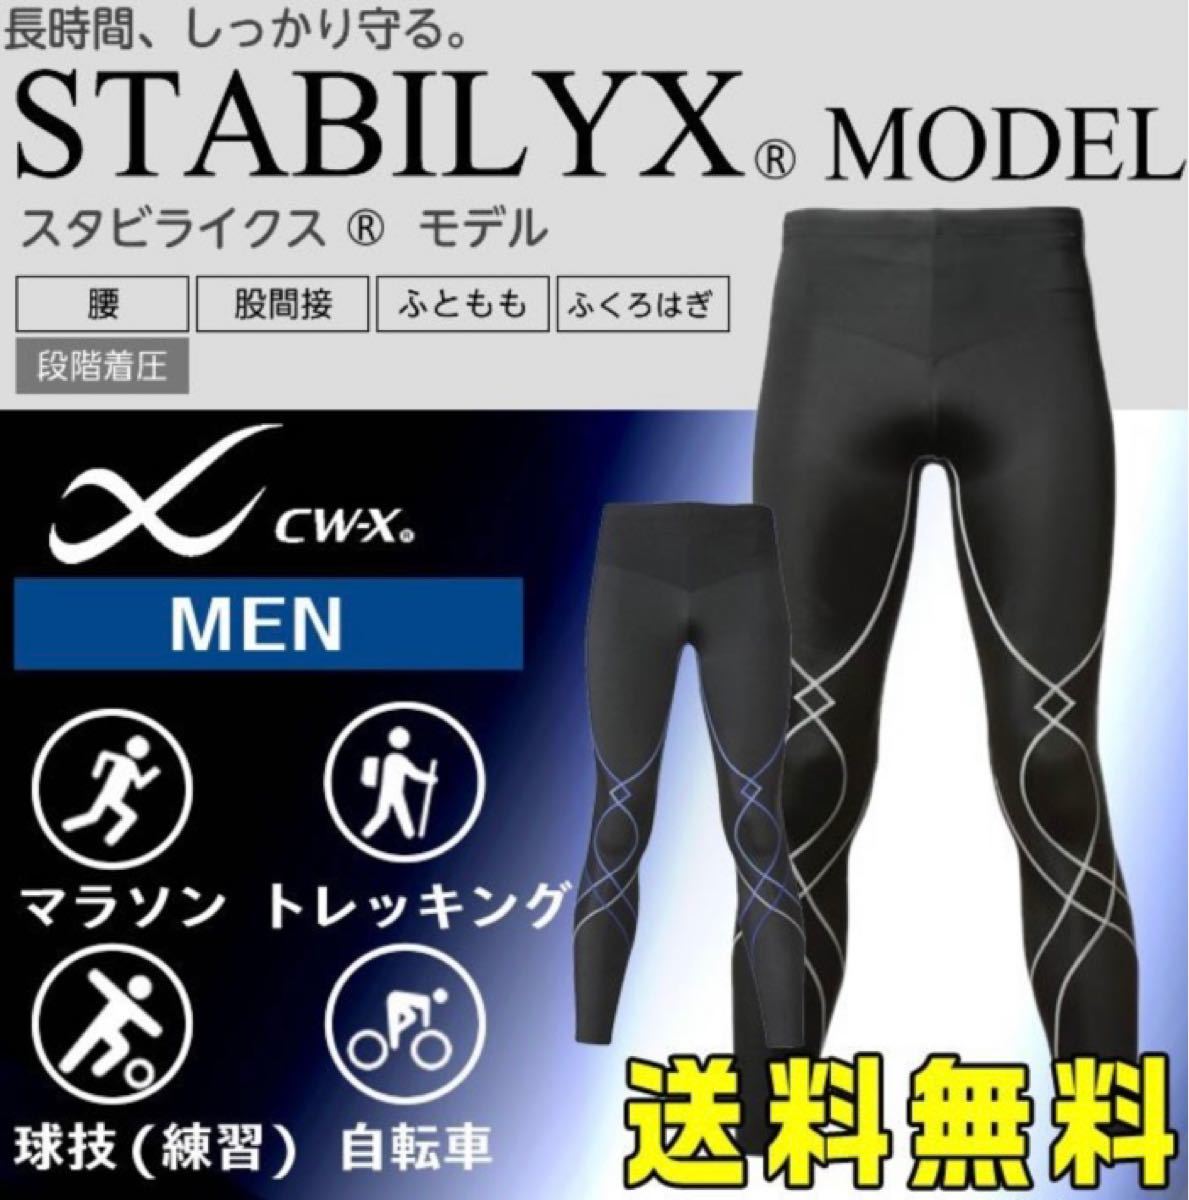 CW-Xコンプレッションスポーツタイツ スタビライクスモデル Men's M美品-